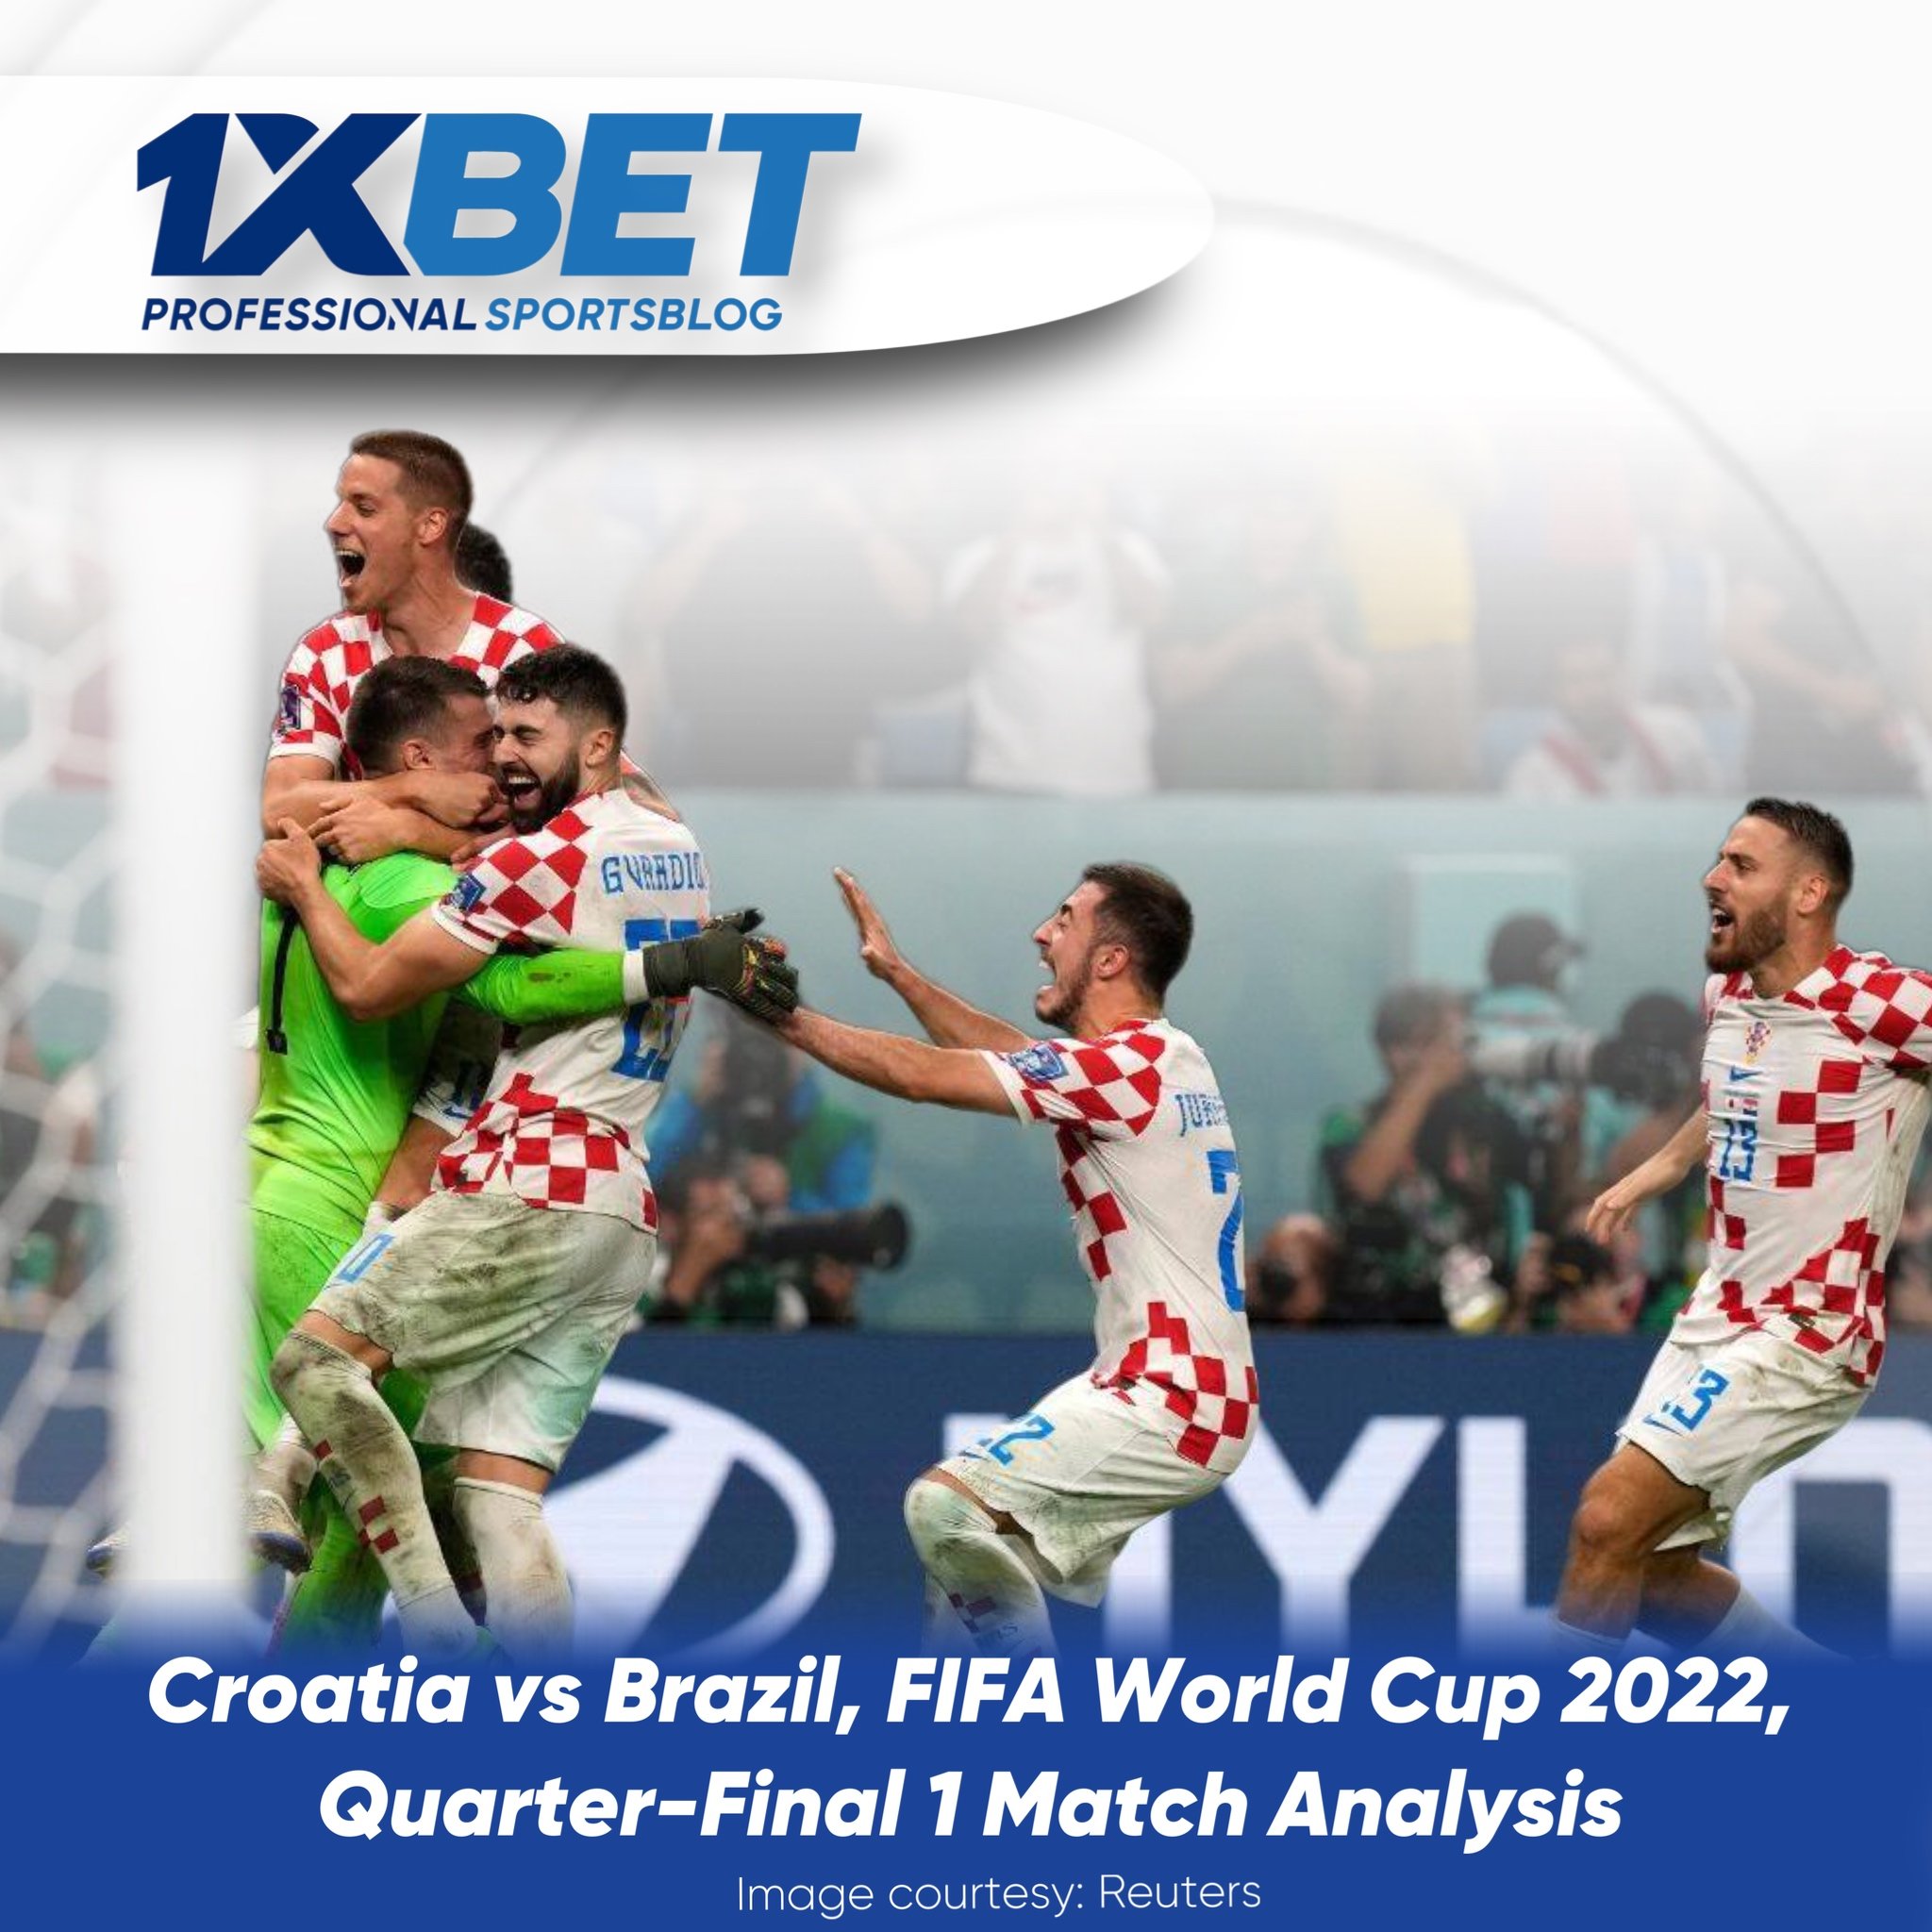 Croatia vs Brazil, FIFA World Cup 2022, Quarter-Final 1 Match Analysis